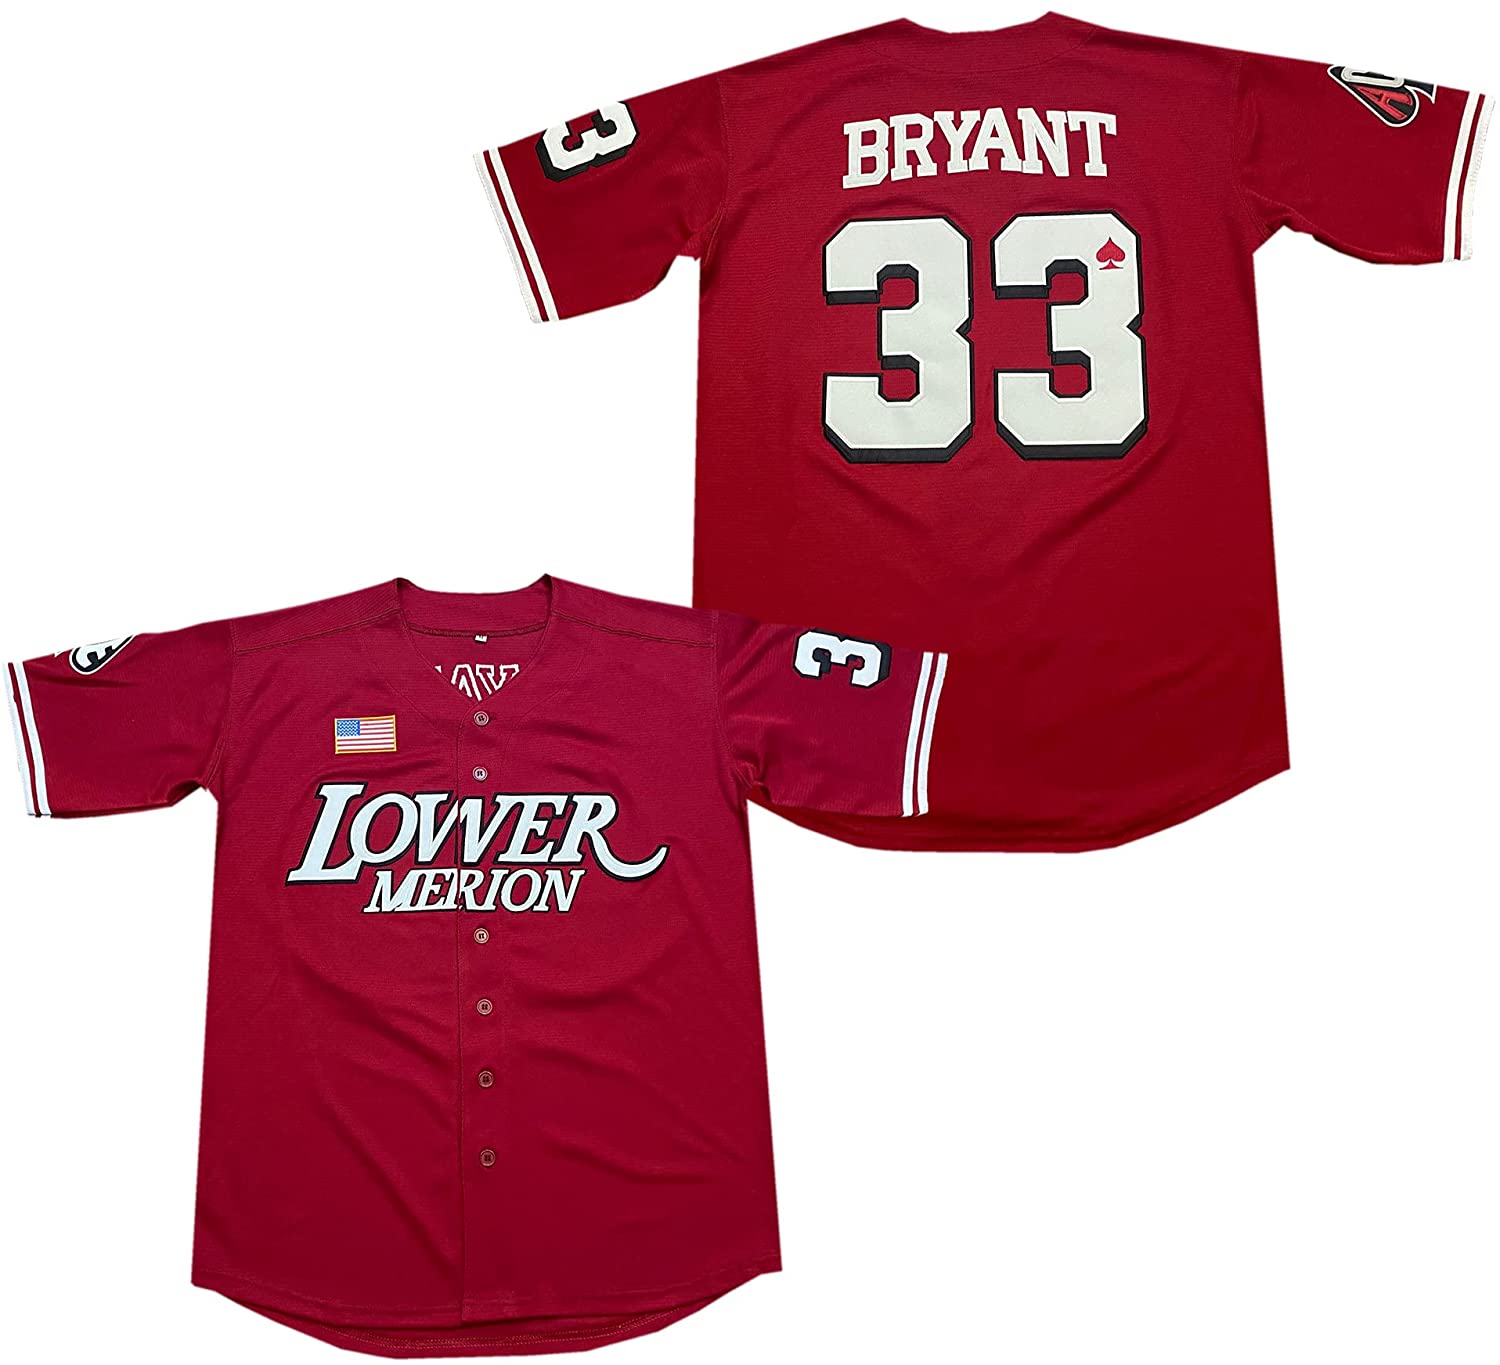 Kobe Bryant #33 Lower Merion Baseball Jersey – MOLPE